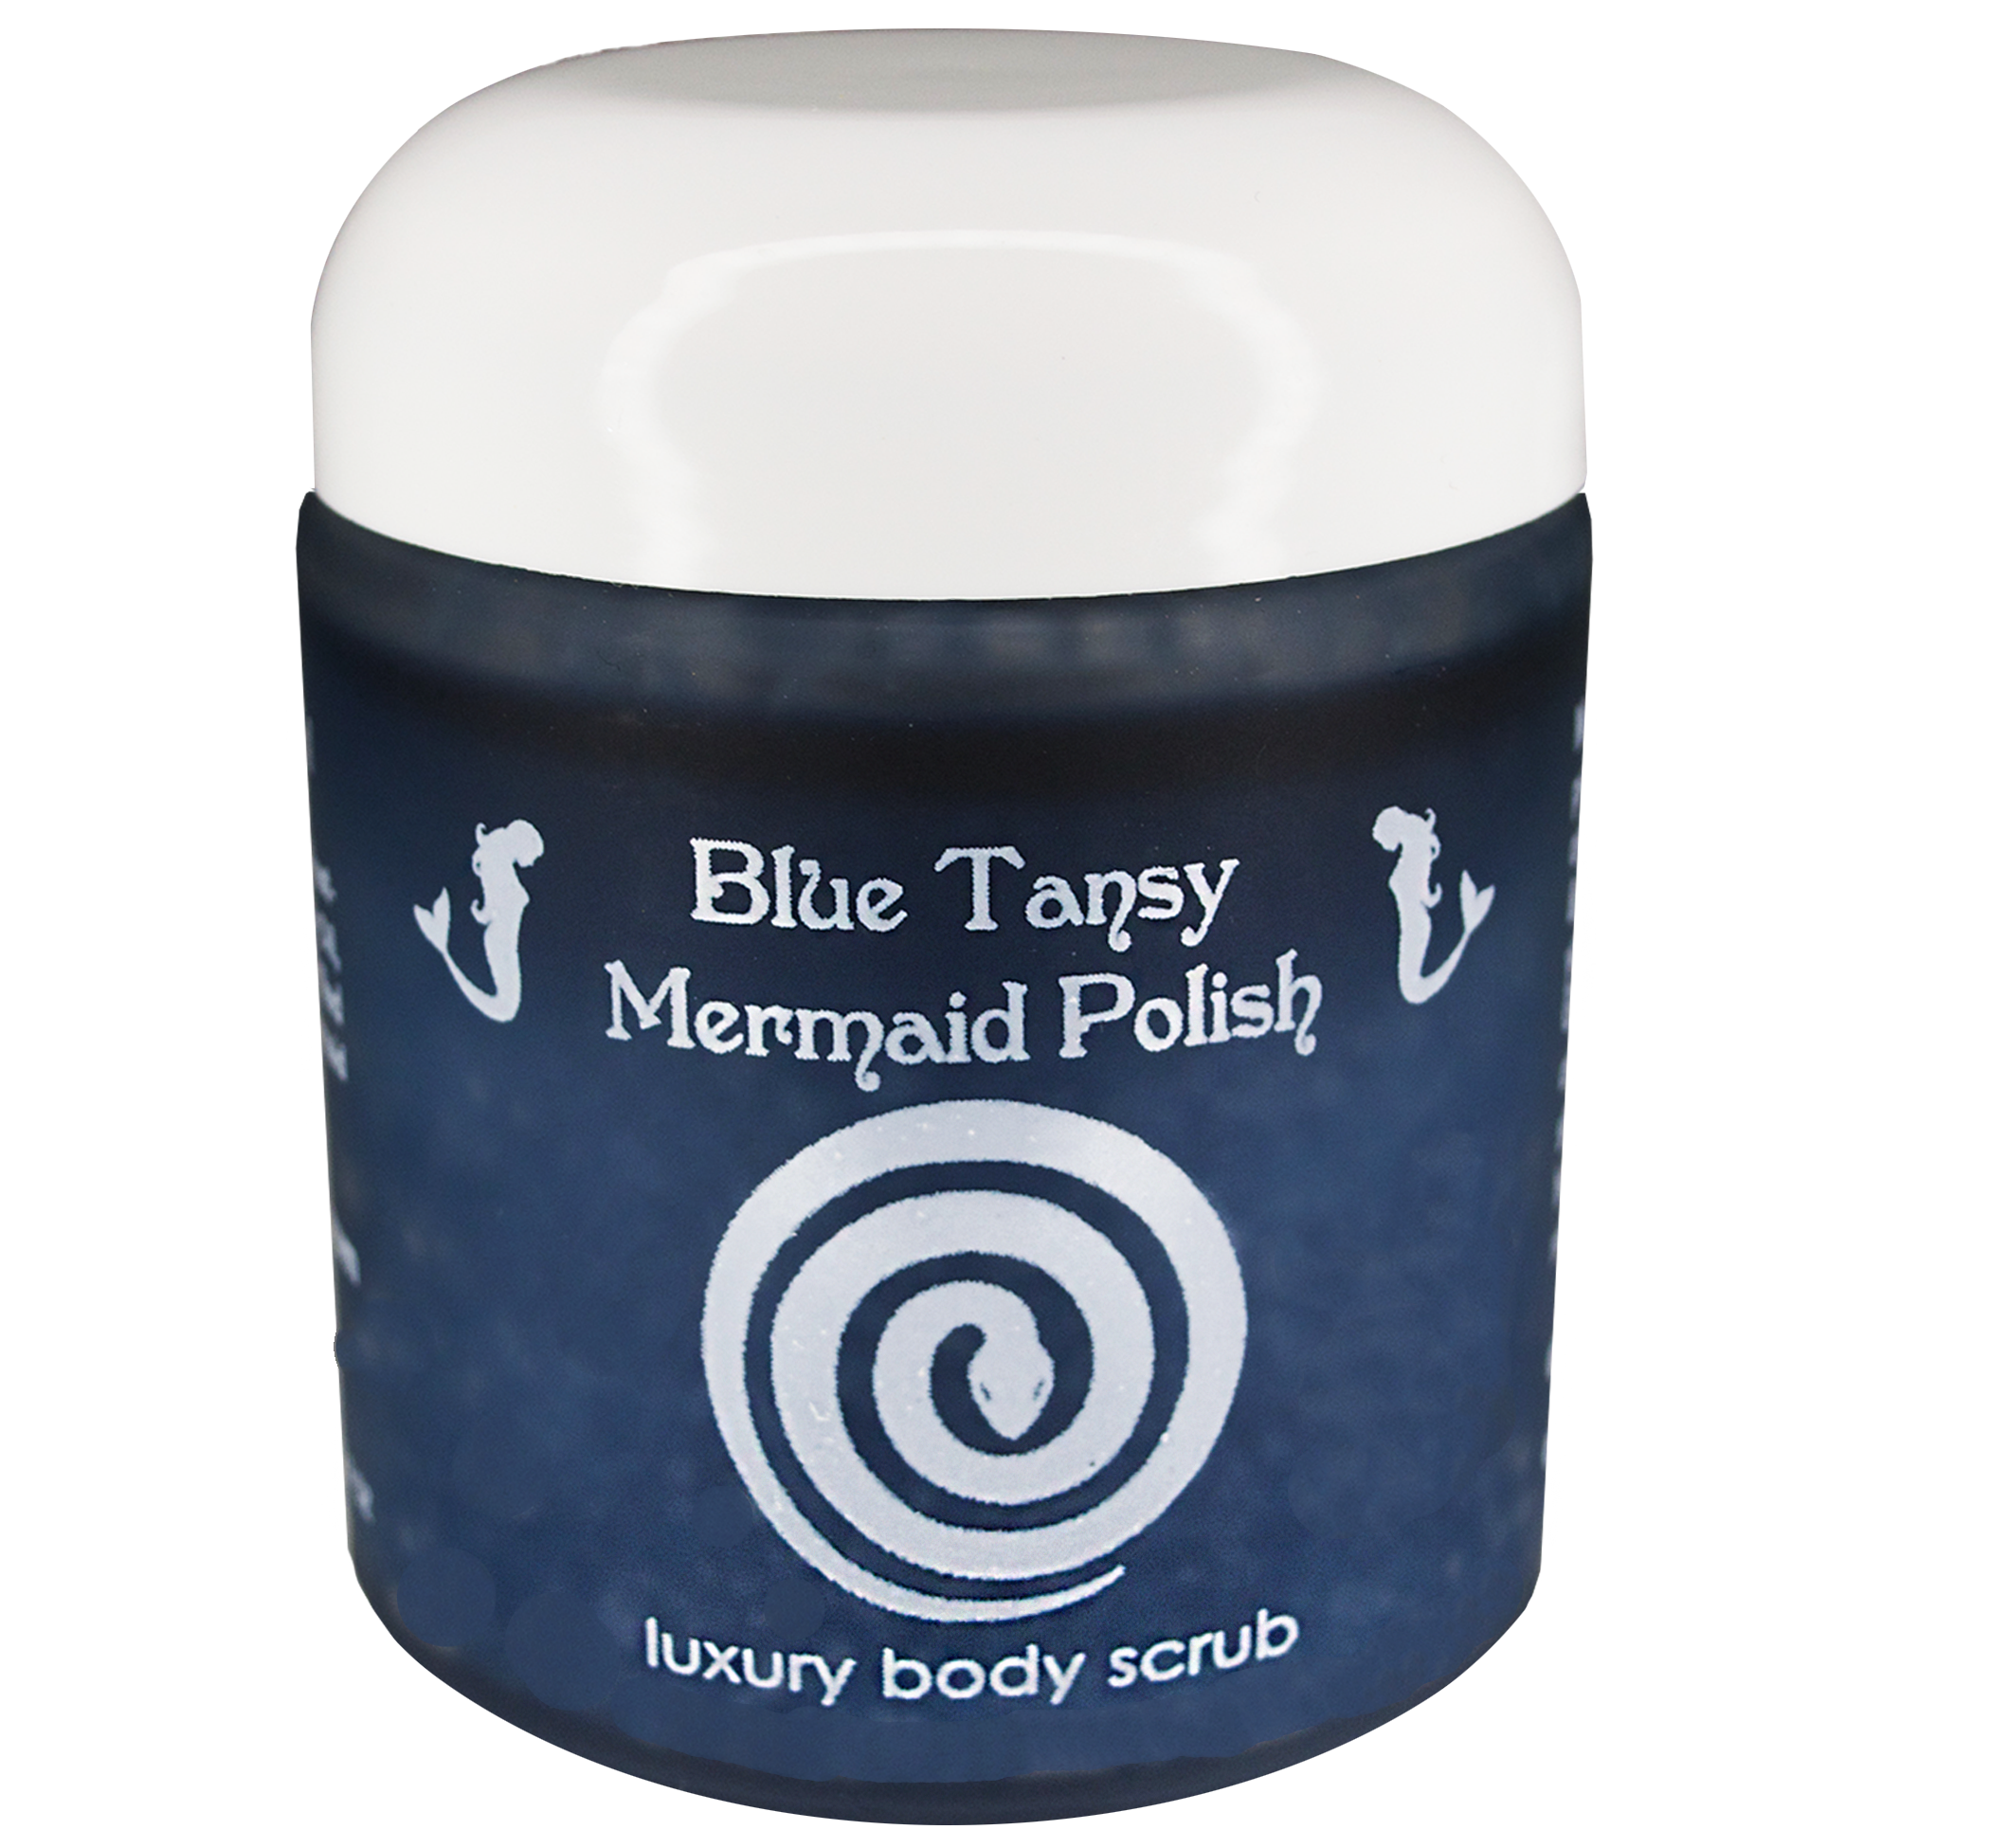 Mermaid Polish ~ blue tansy organic body salt scrub